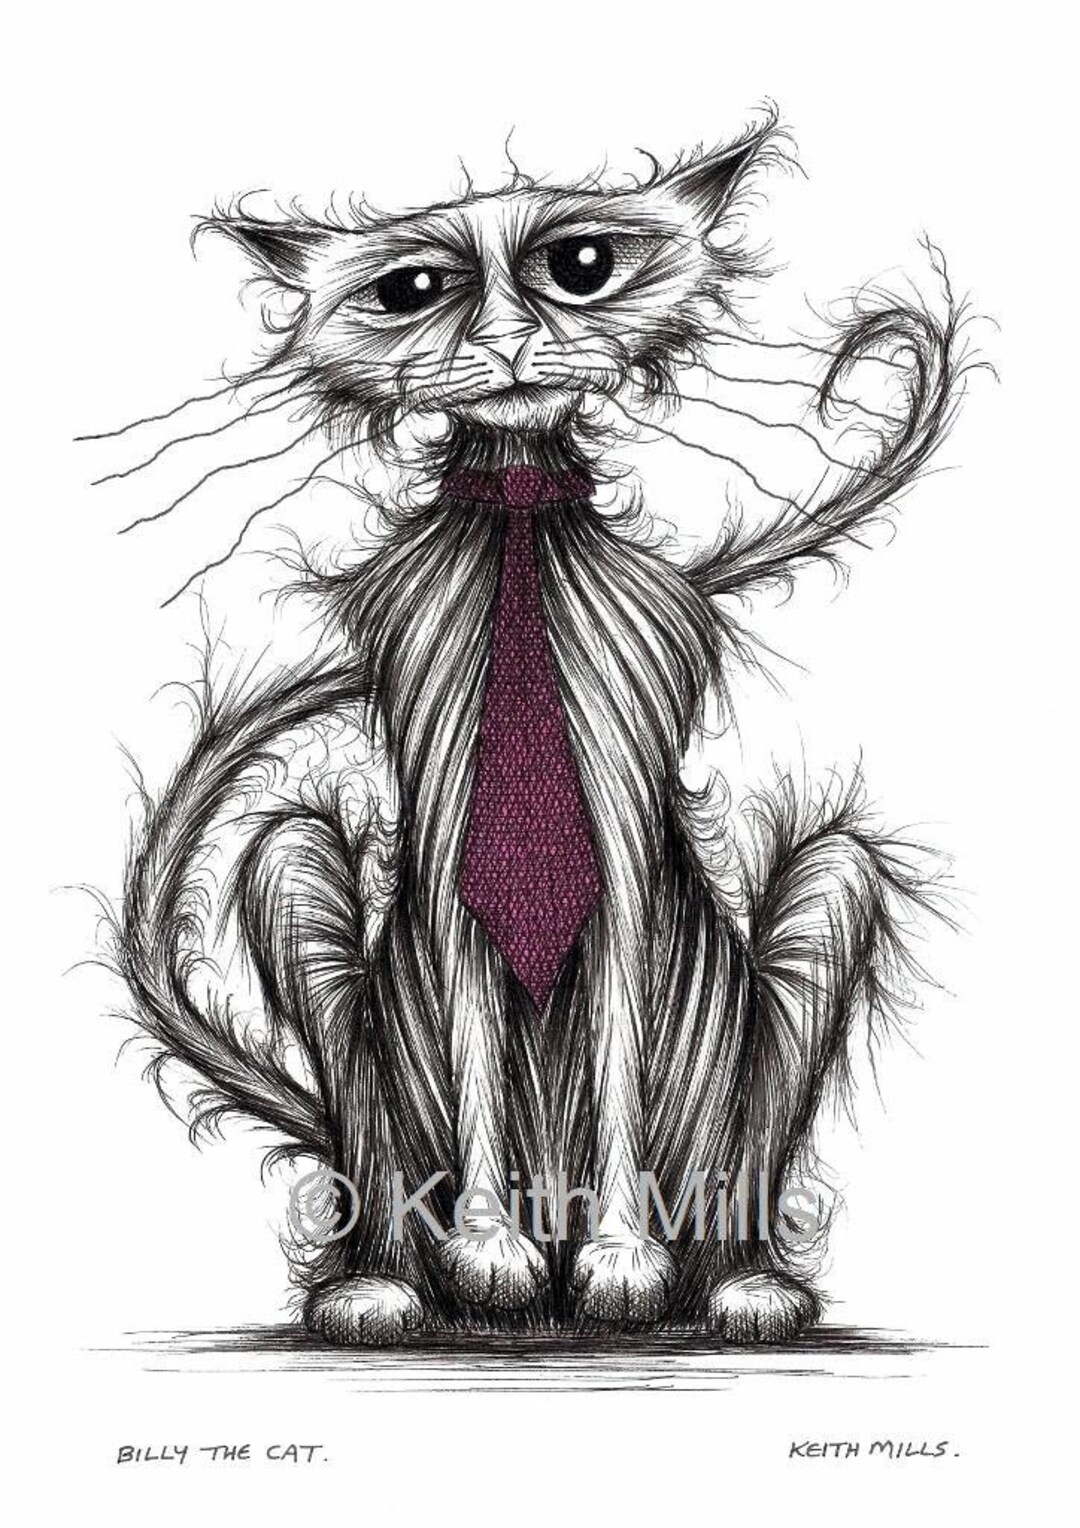 grumpy cat pencil drawing